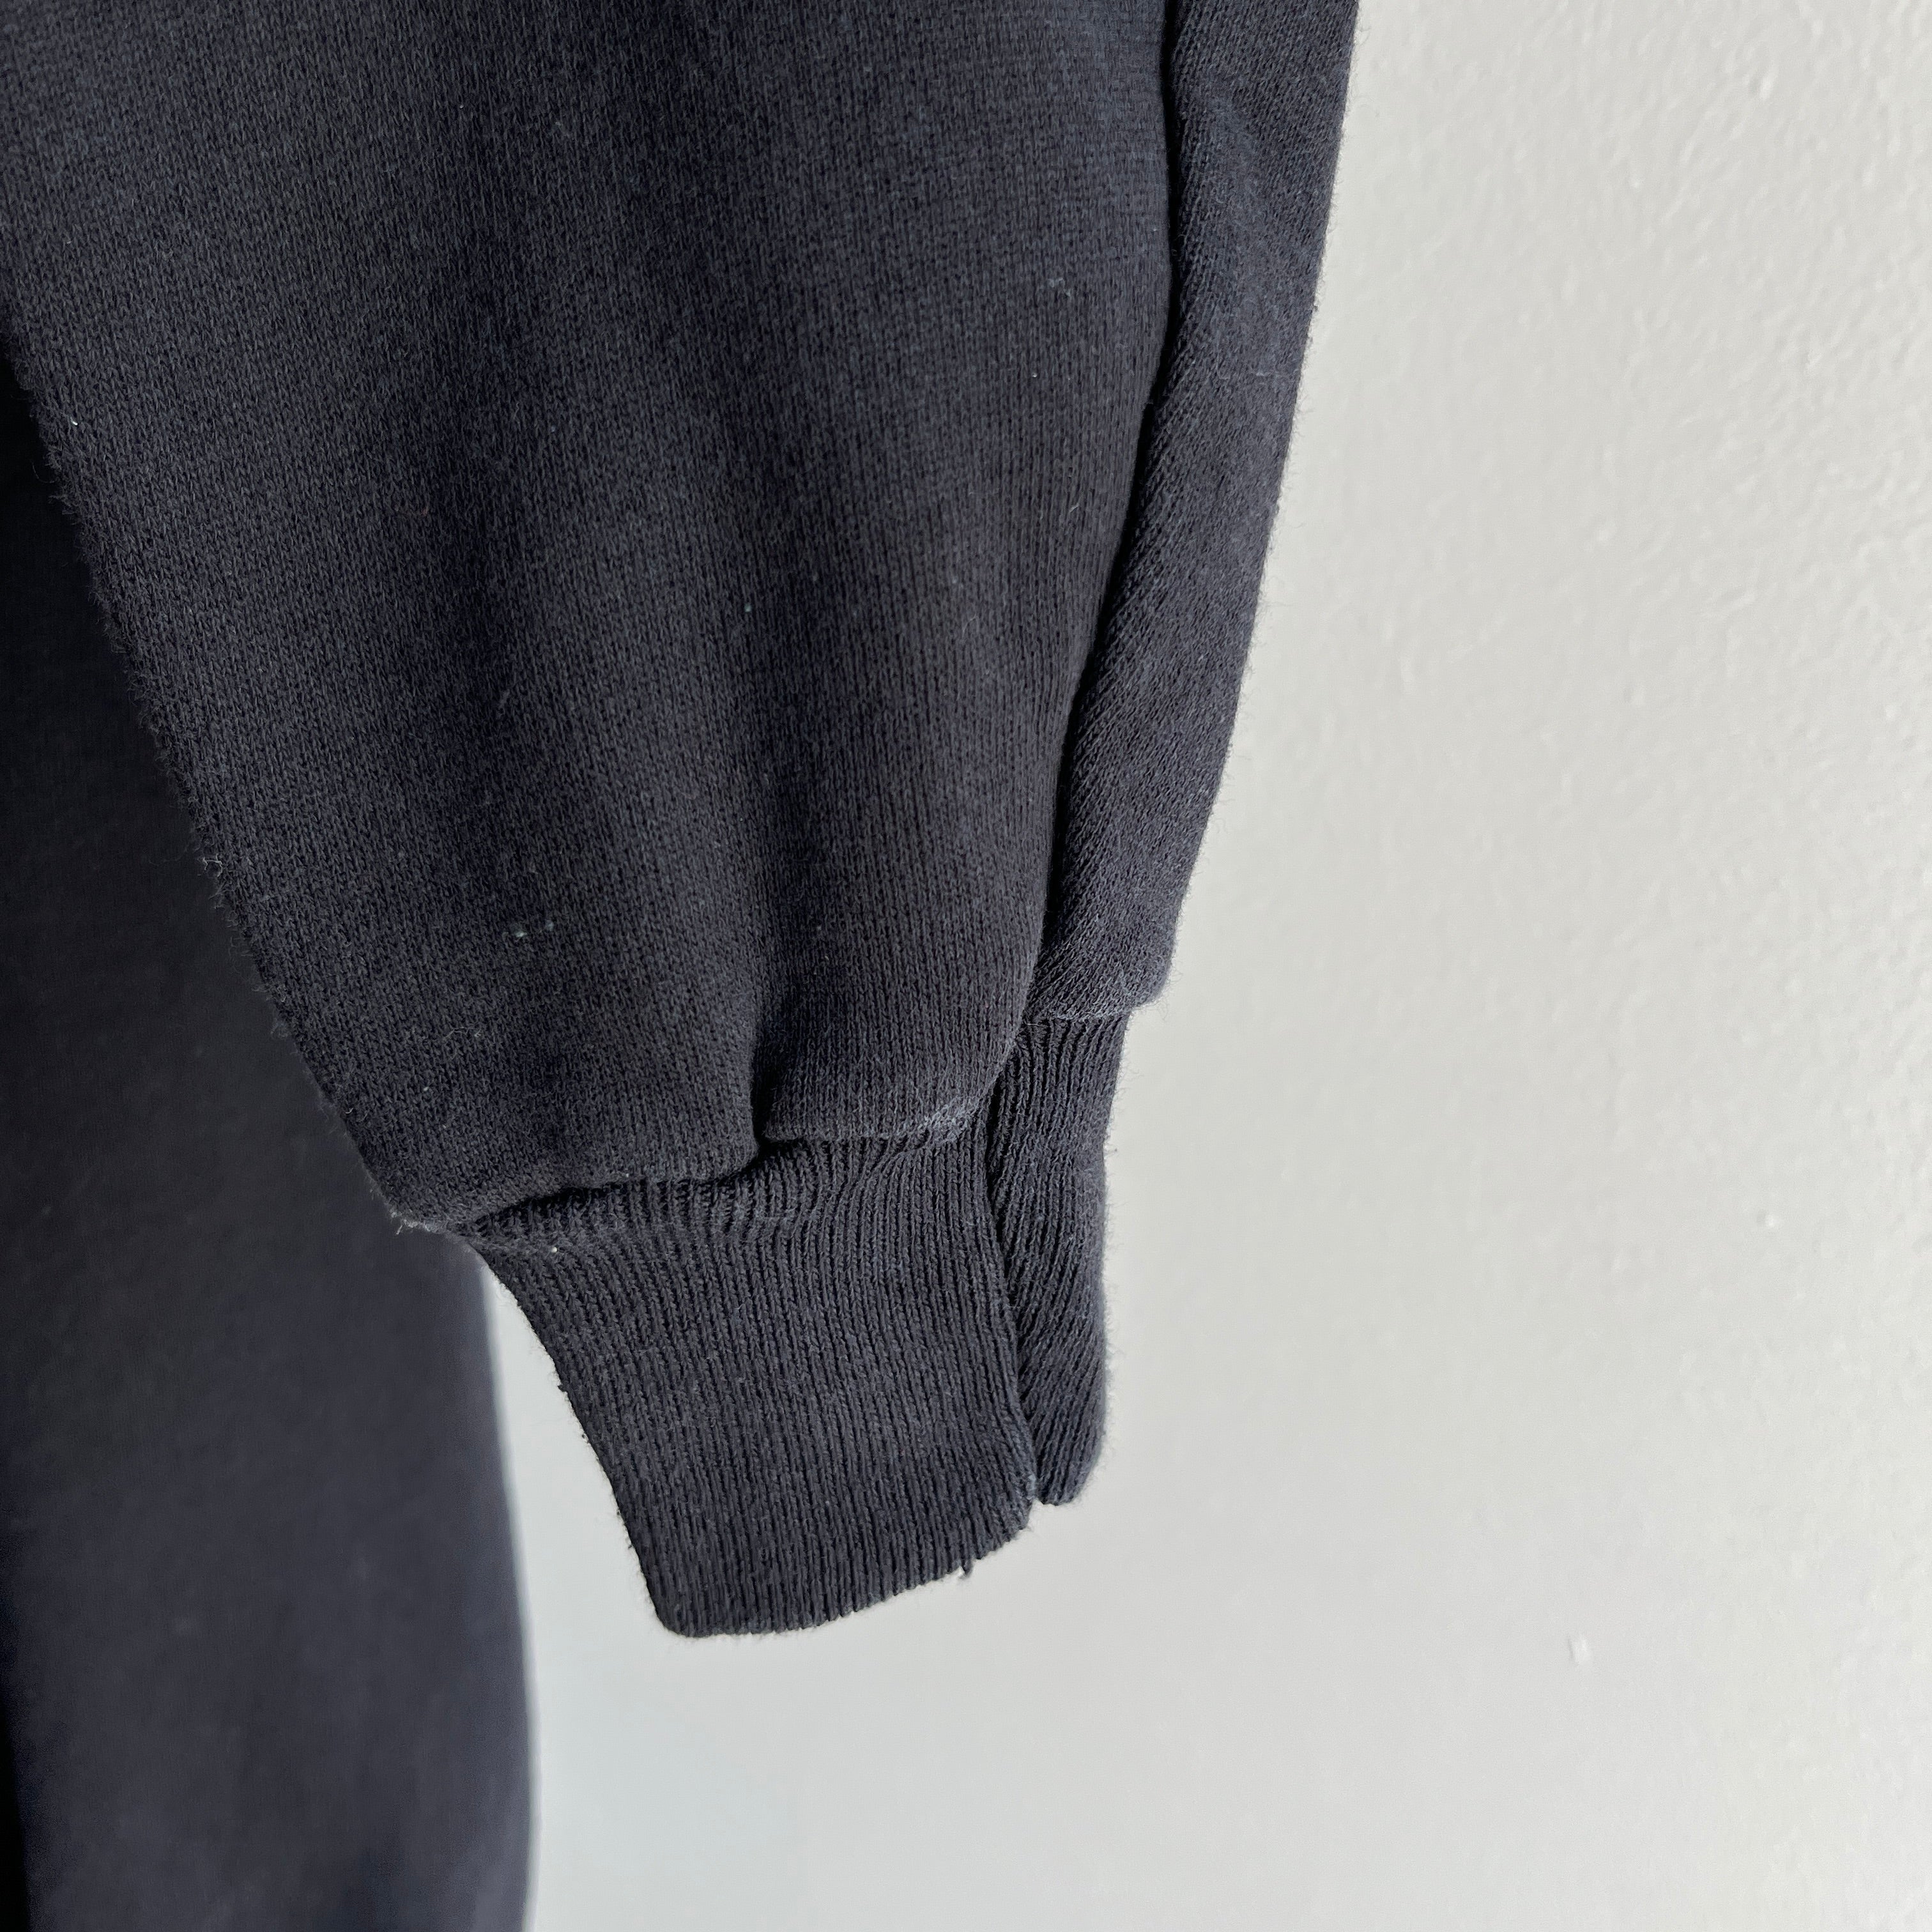 1980s Blank Black Sweatshirt by Pannill x Hanes